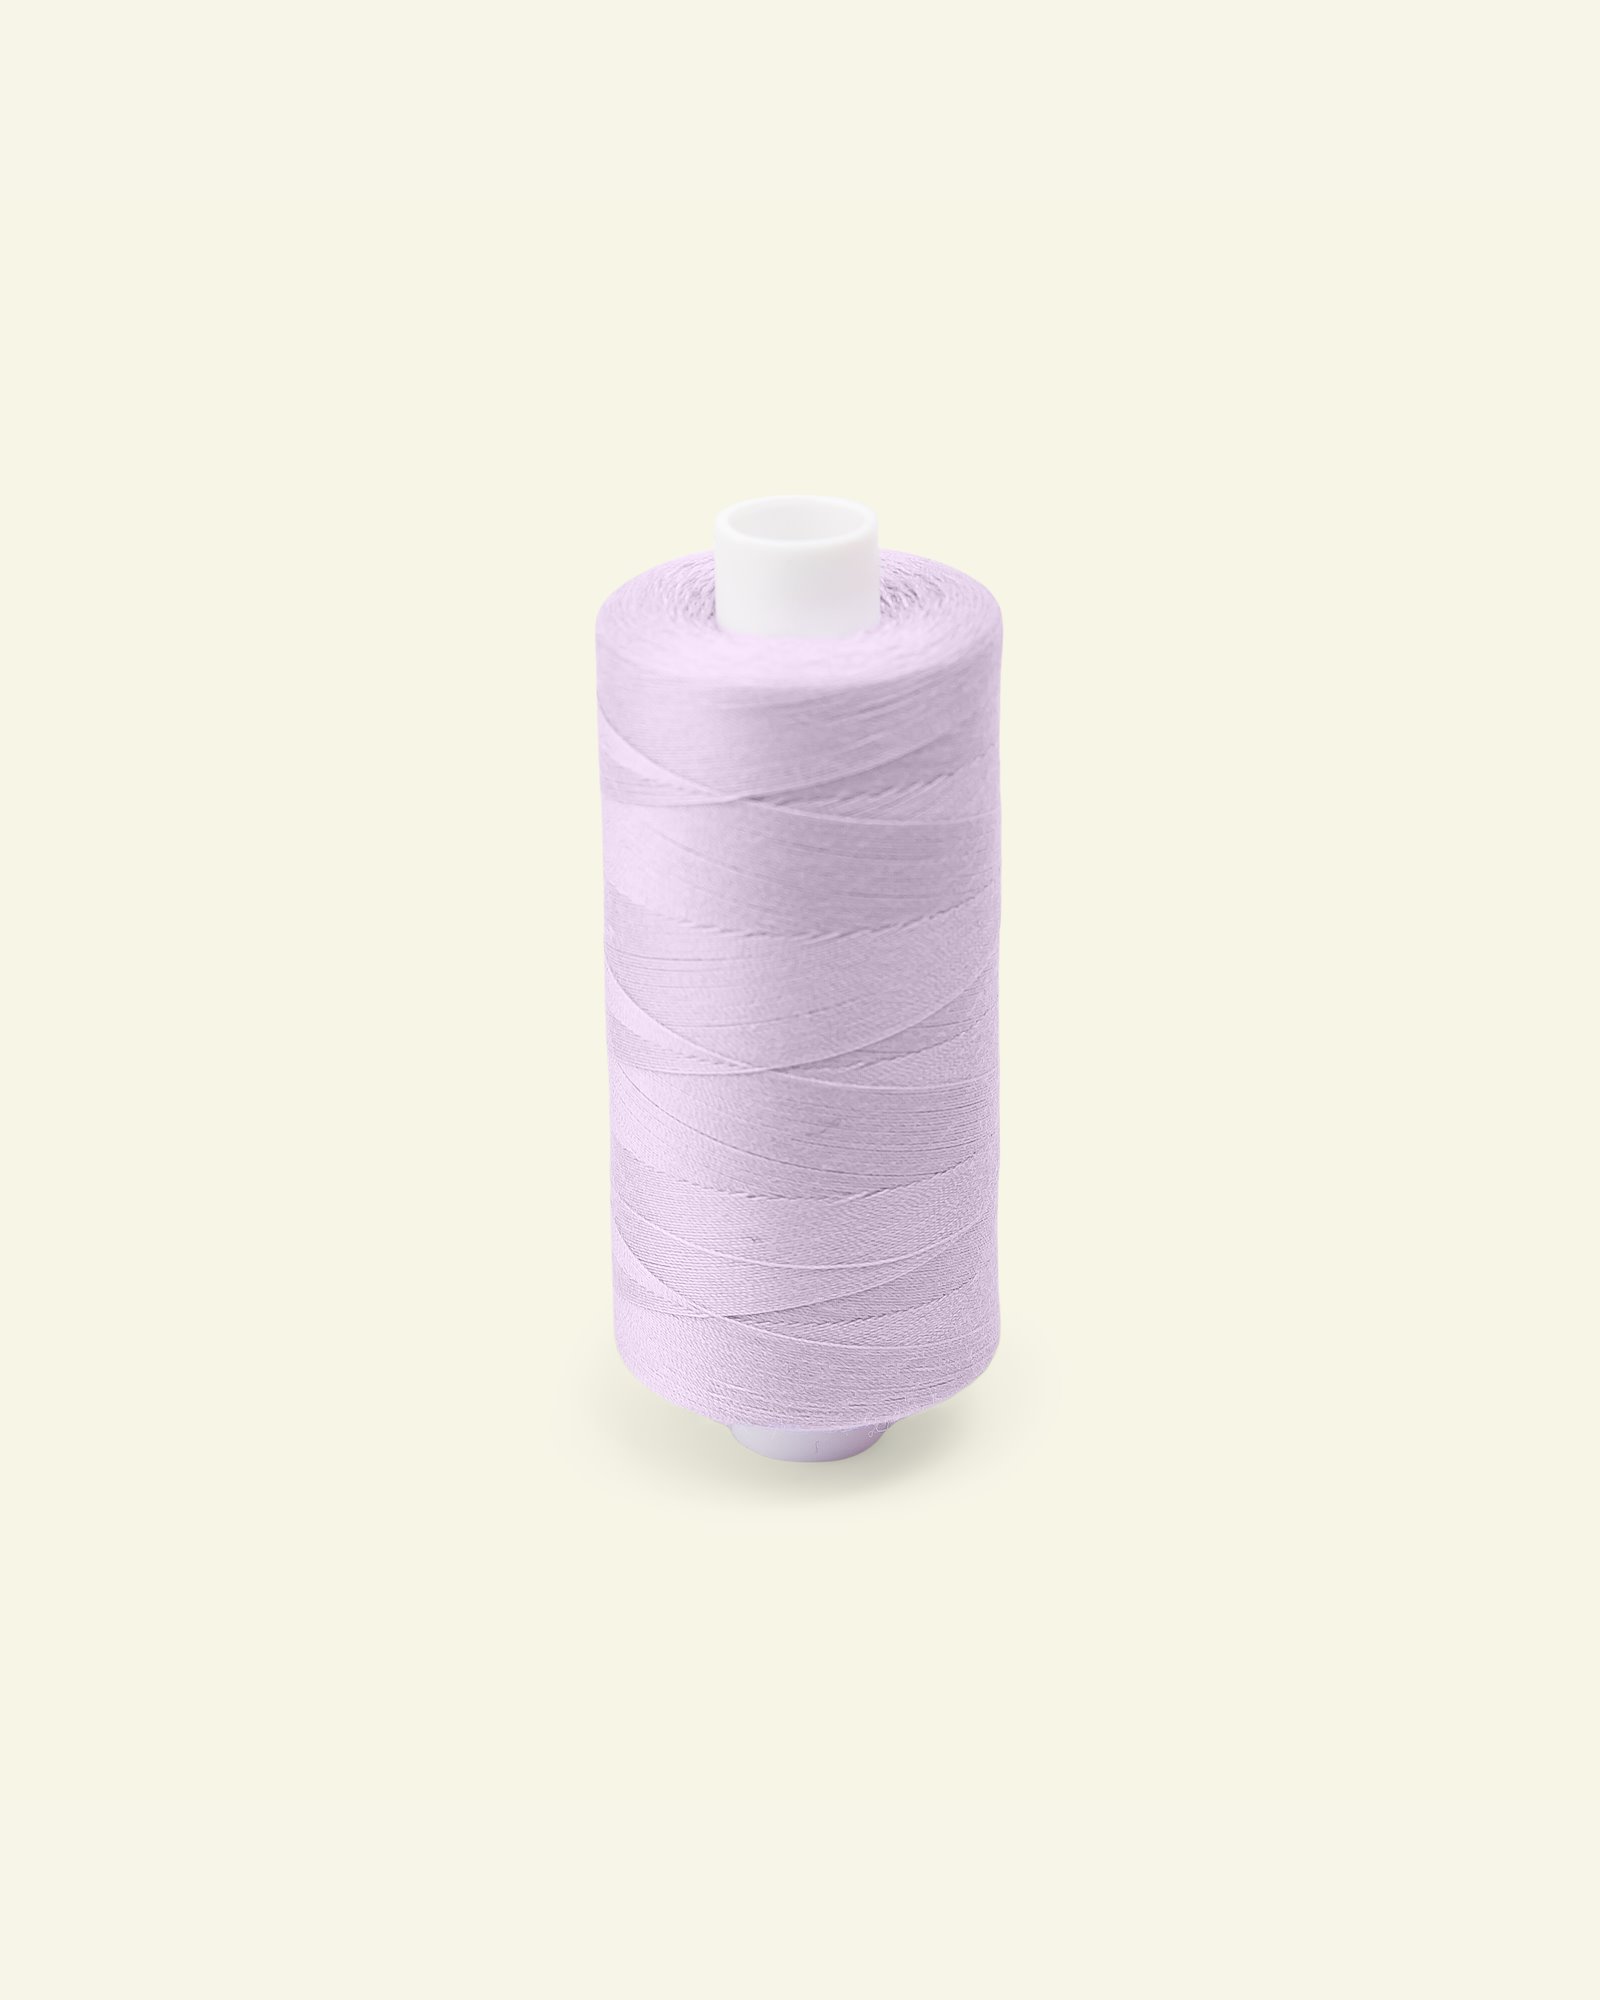 Sewing thread light purple 1000m 12048_pack